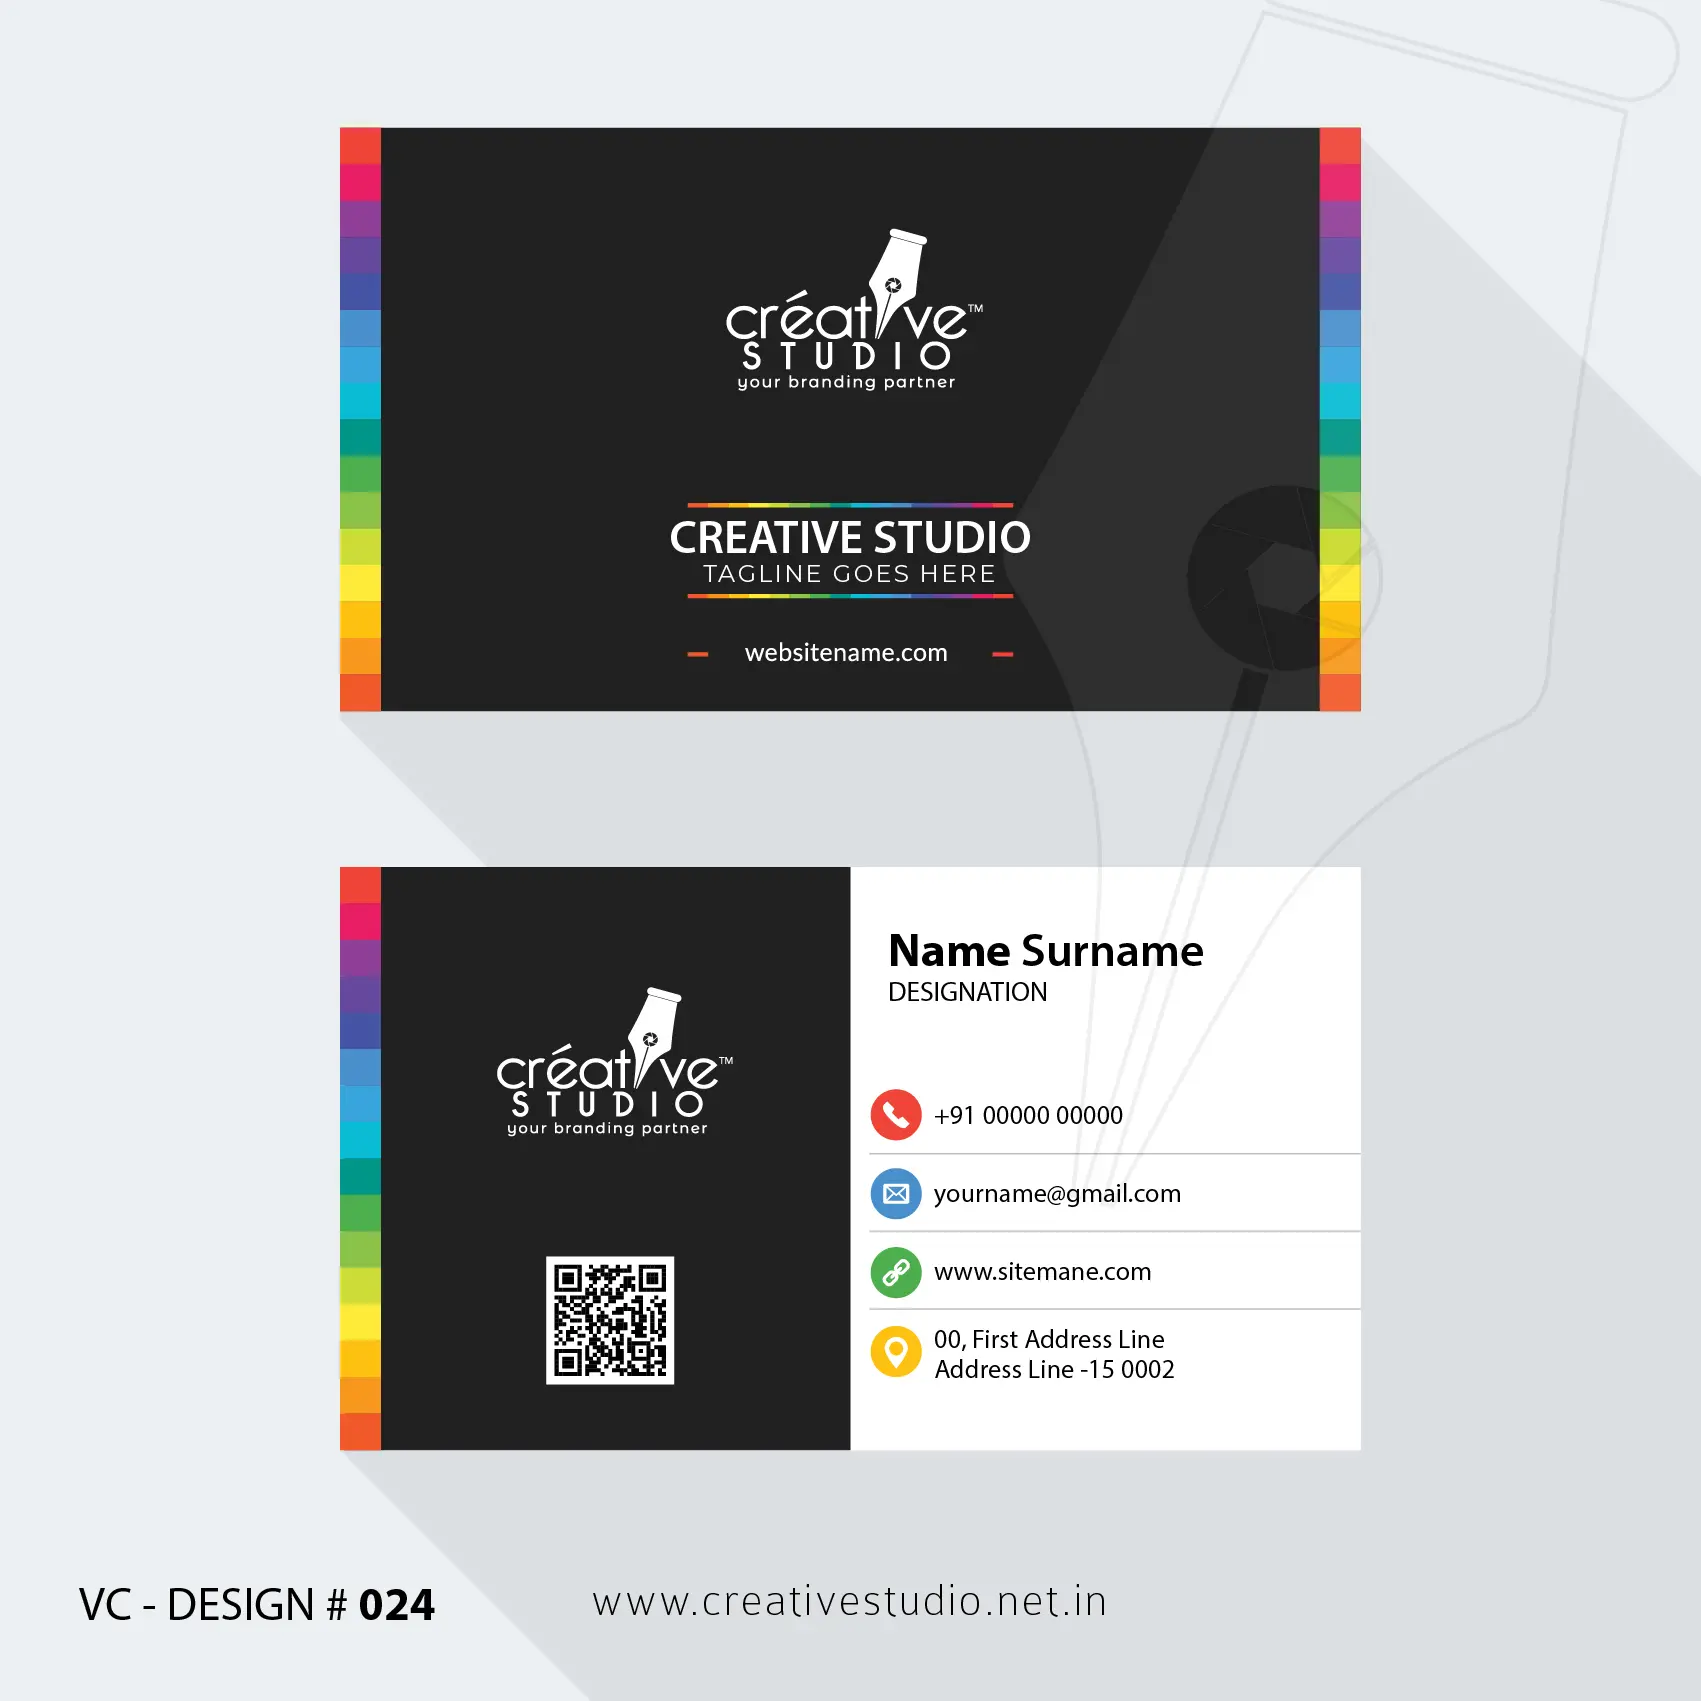 VC DESIGN 024 01 - Visiting Card Portfolio by Creative Studio